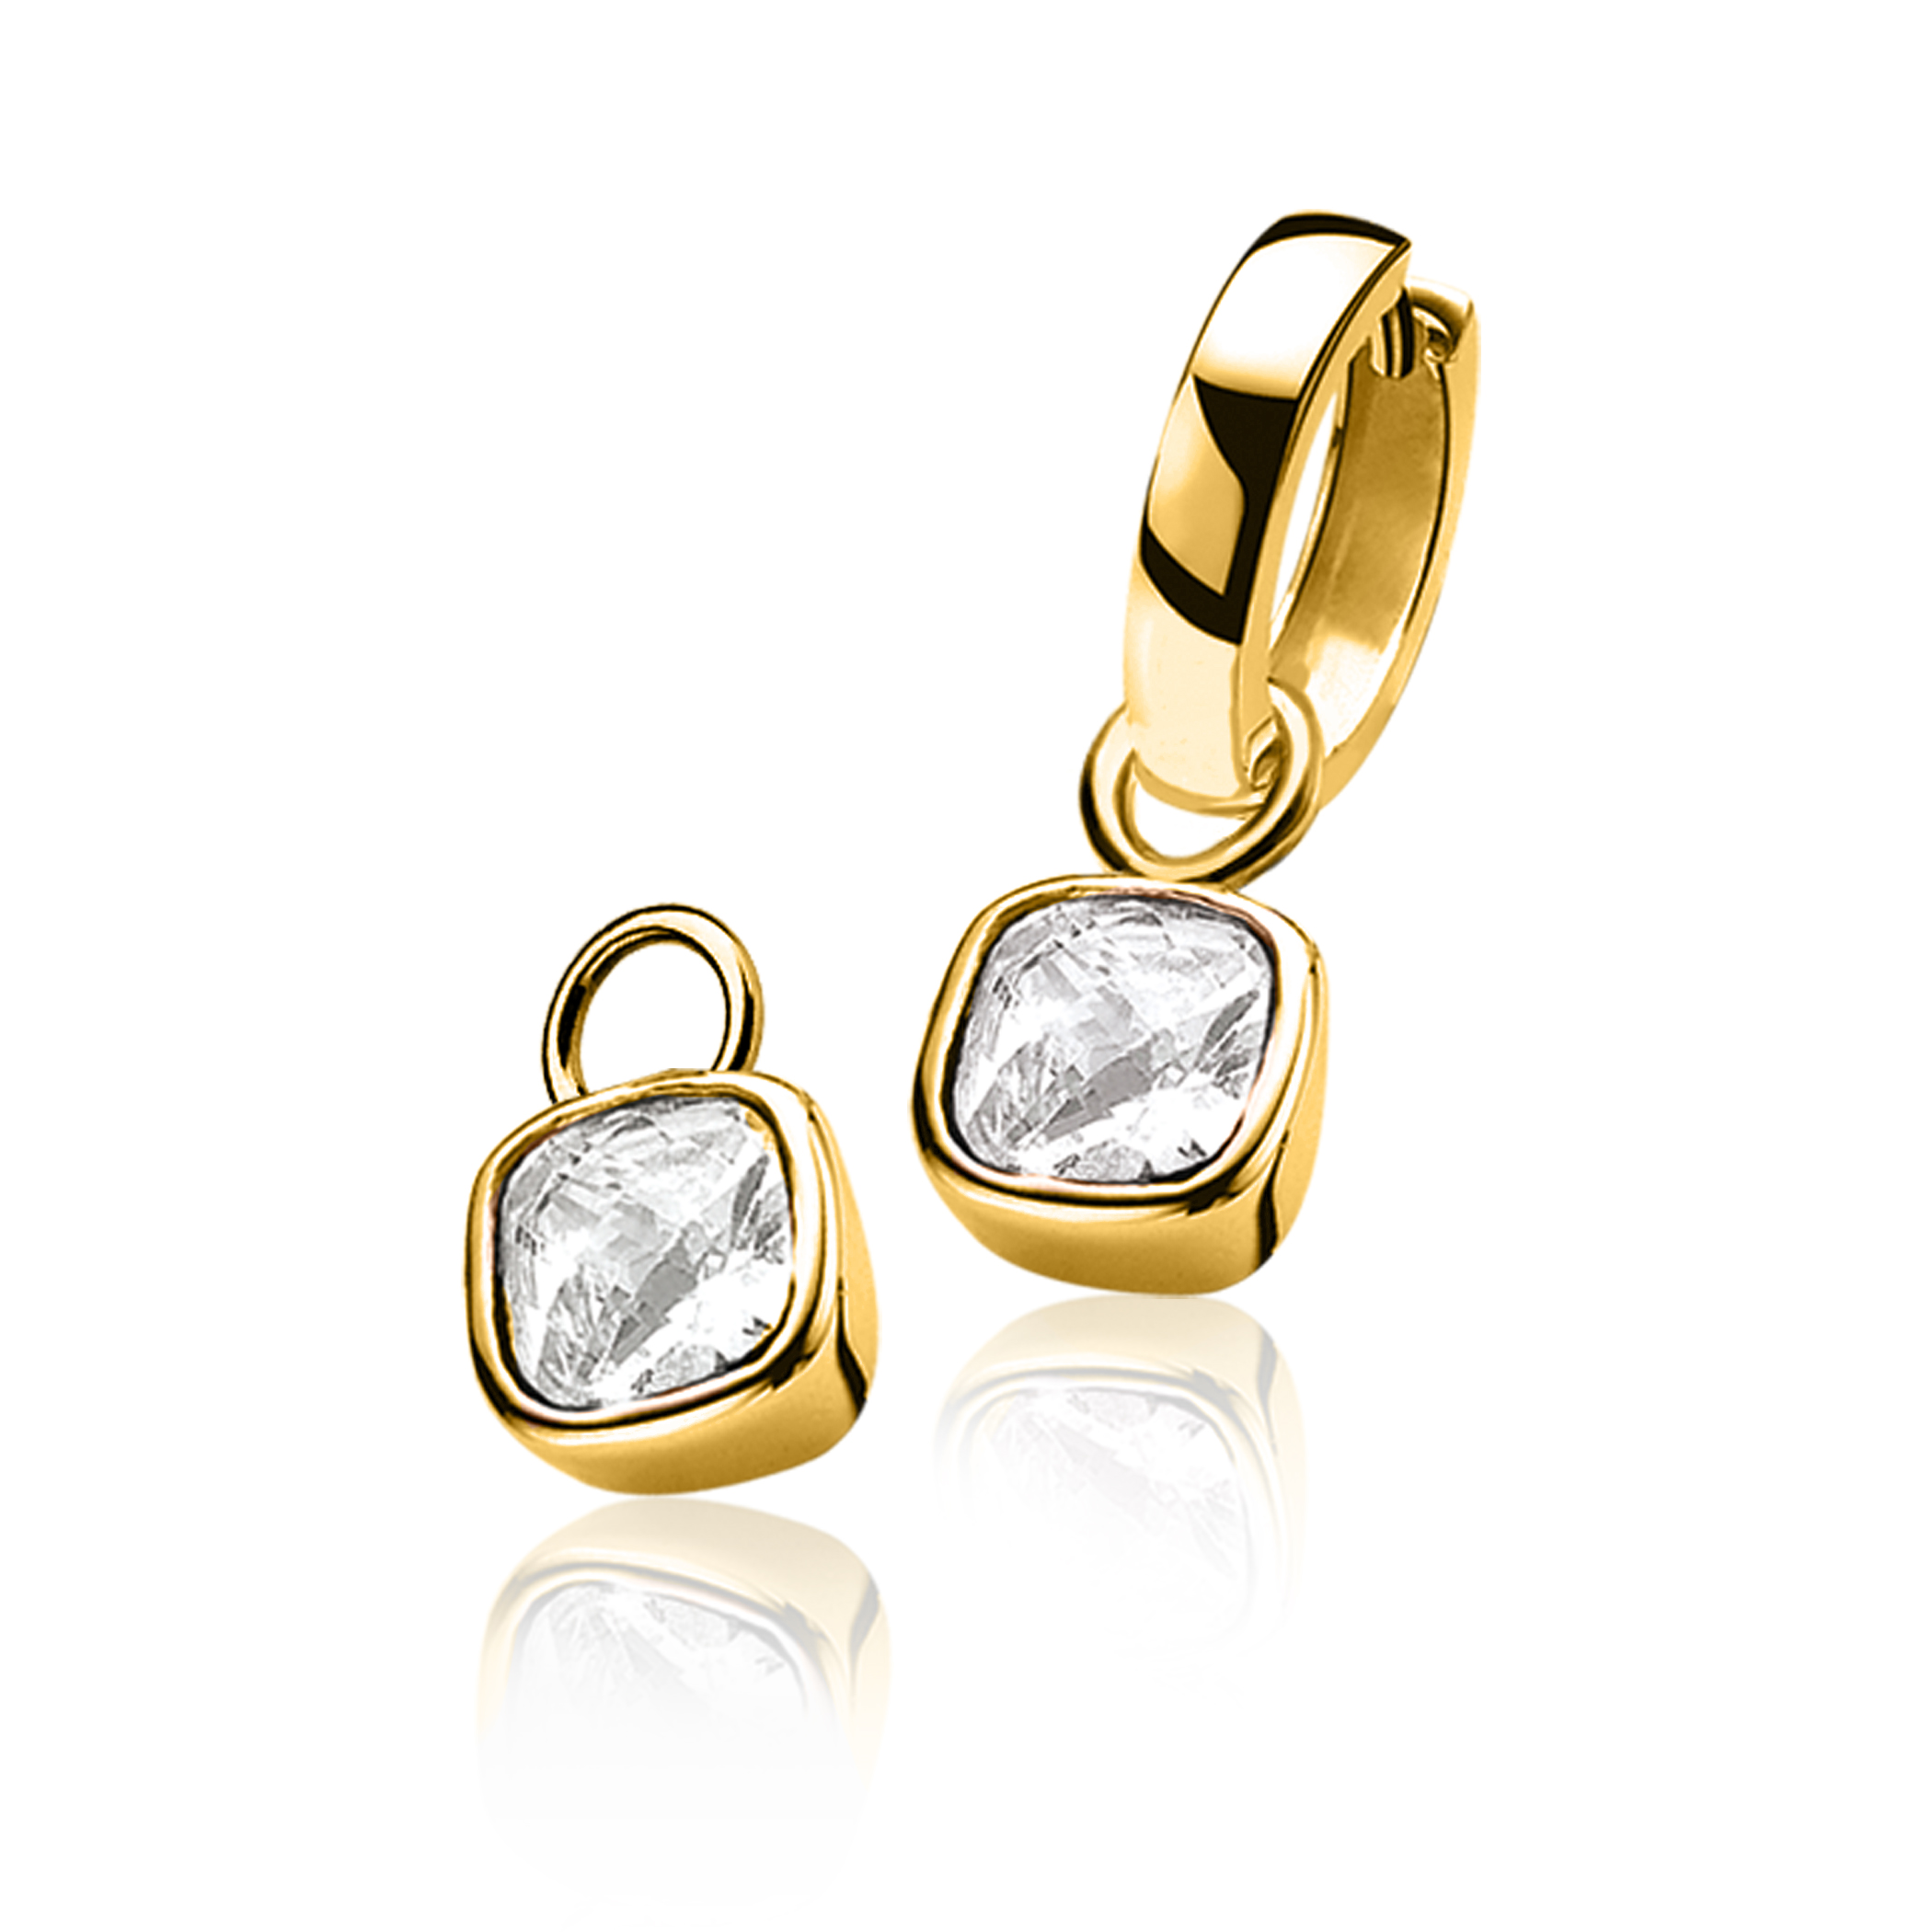 ZINZI Gold Plated Sterling Silver Earrings Pendants White ZICH190Y (excl. hoop earrings)